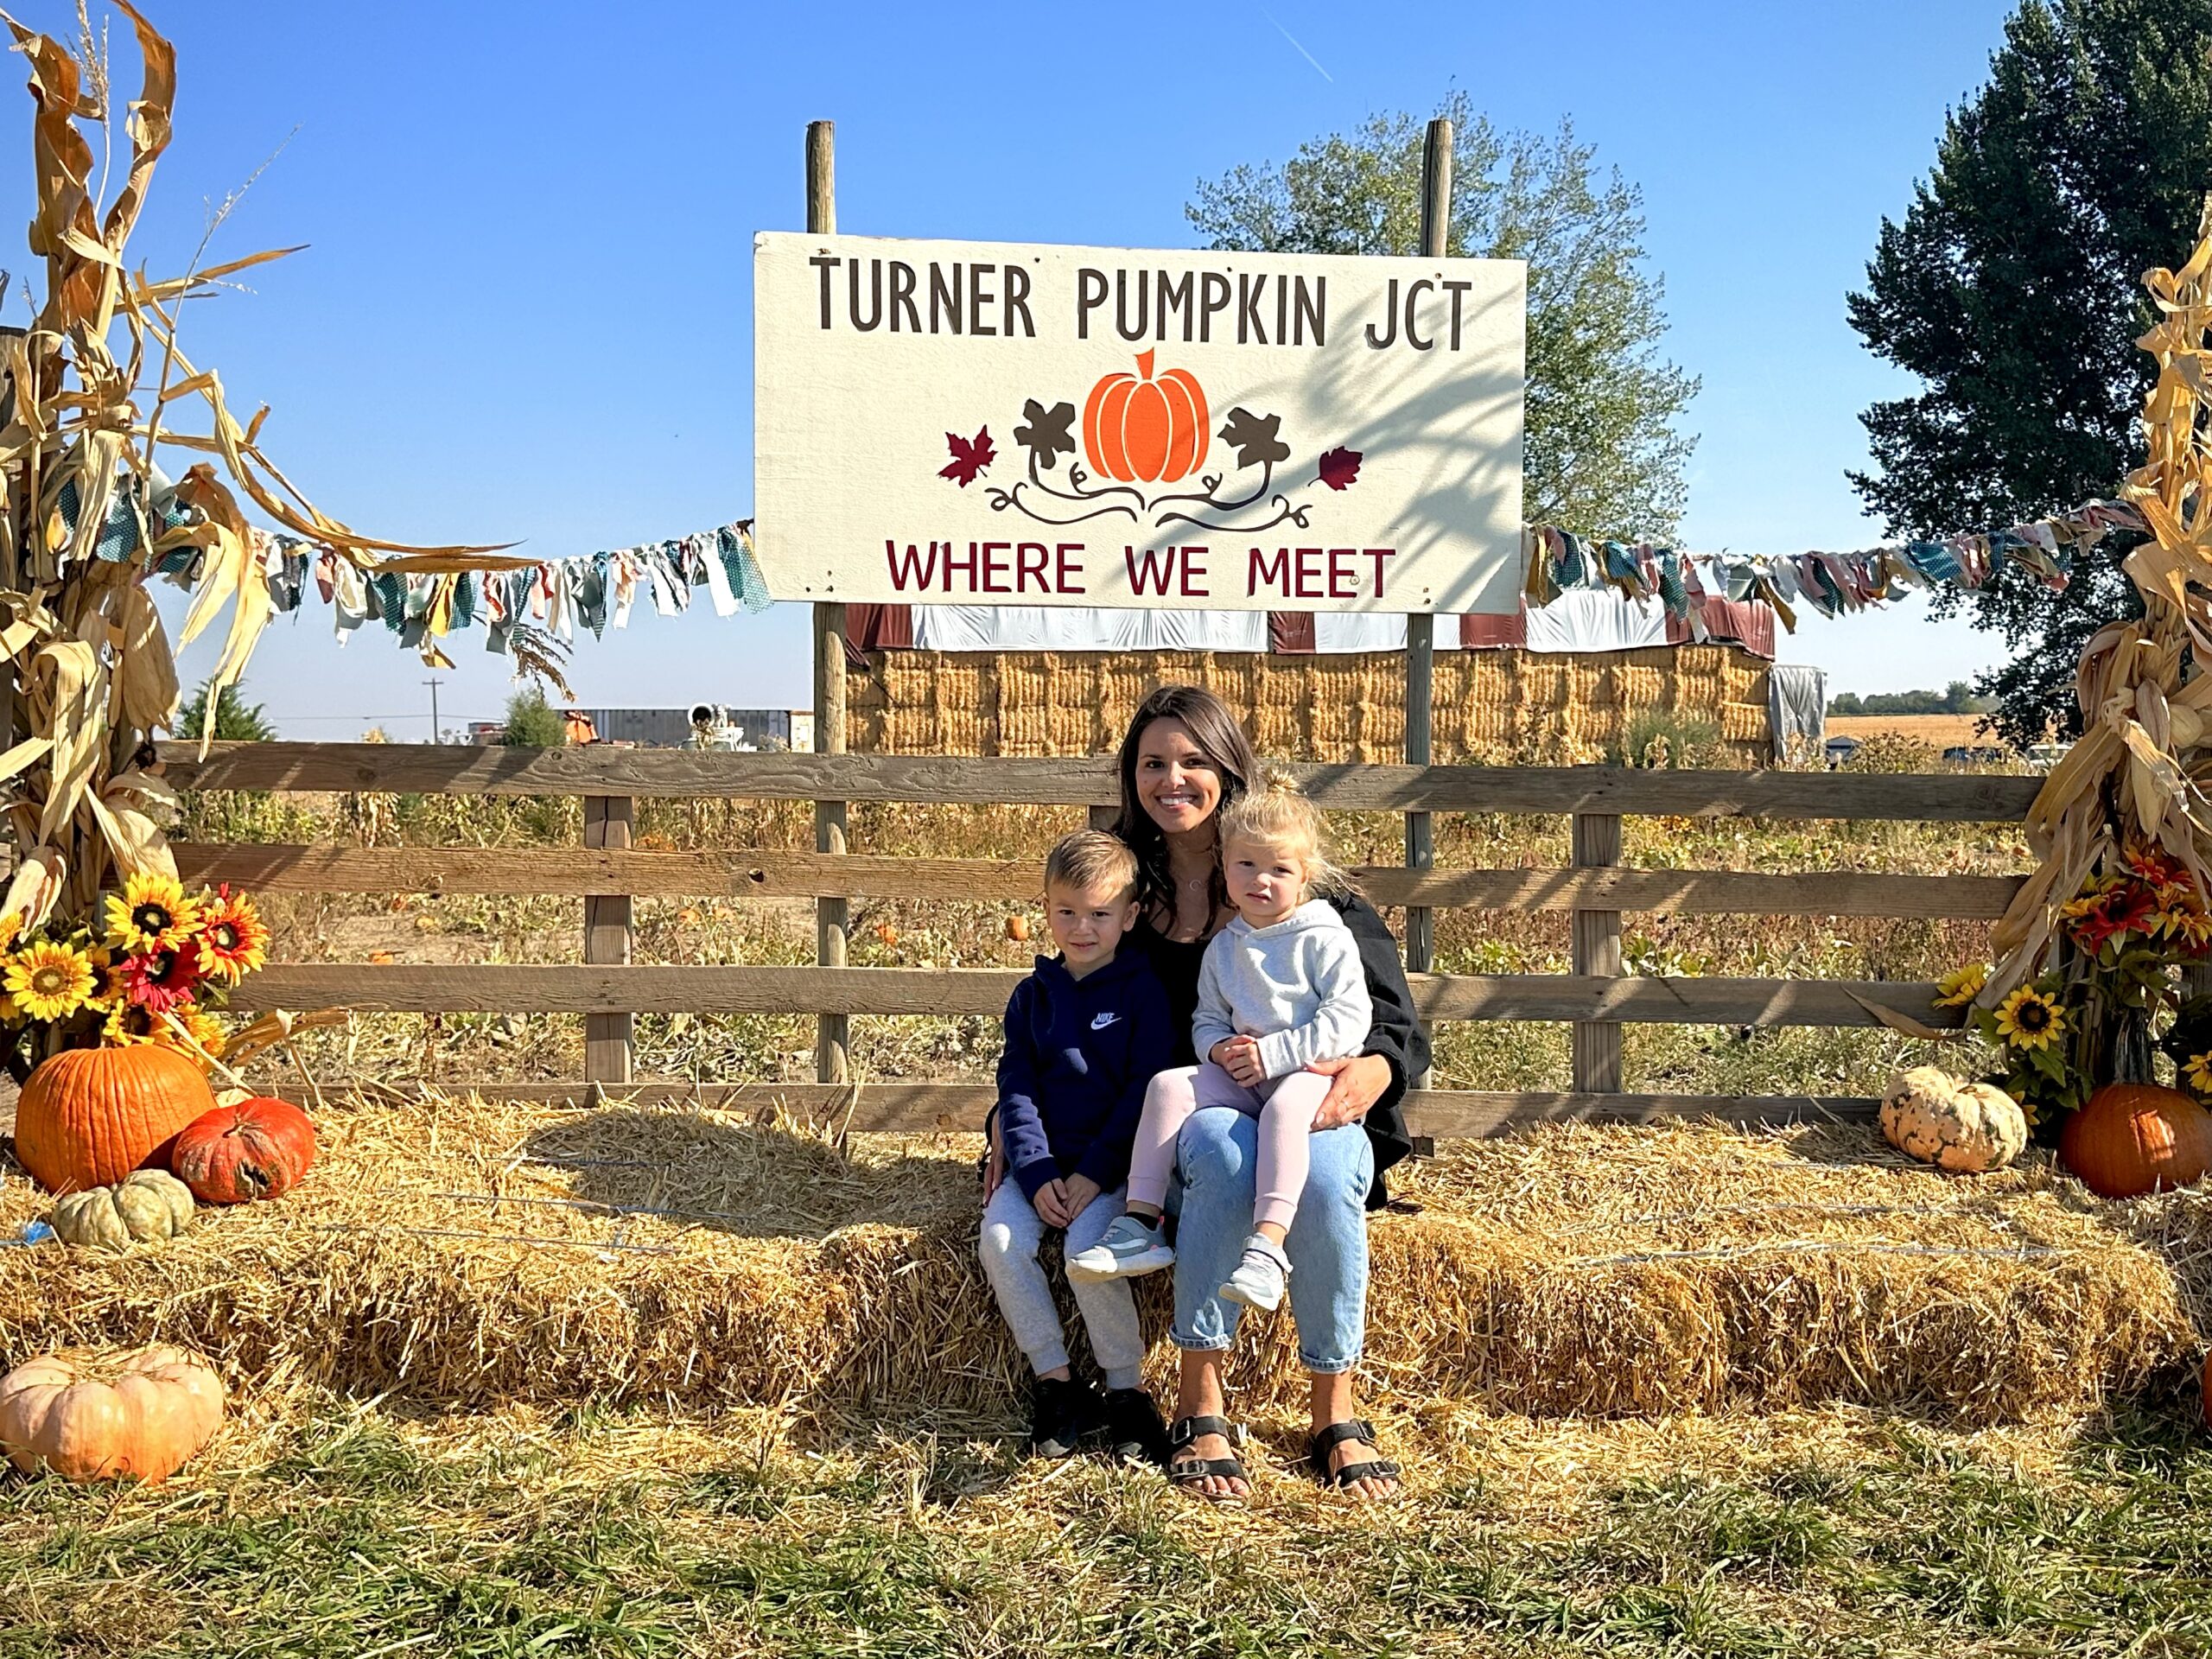 Turner pumpkin junction -090